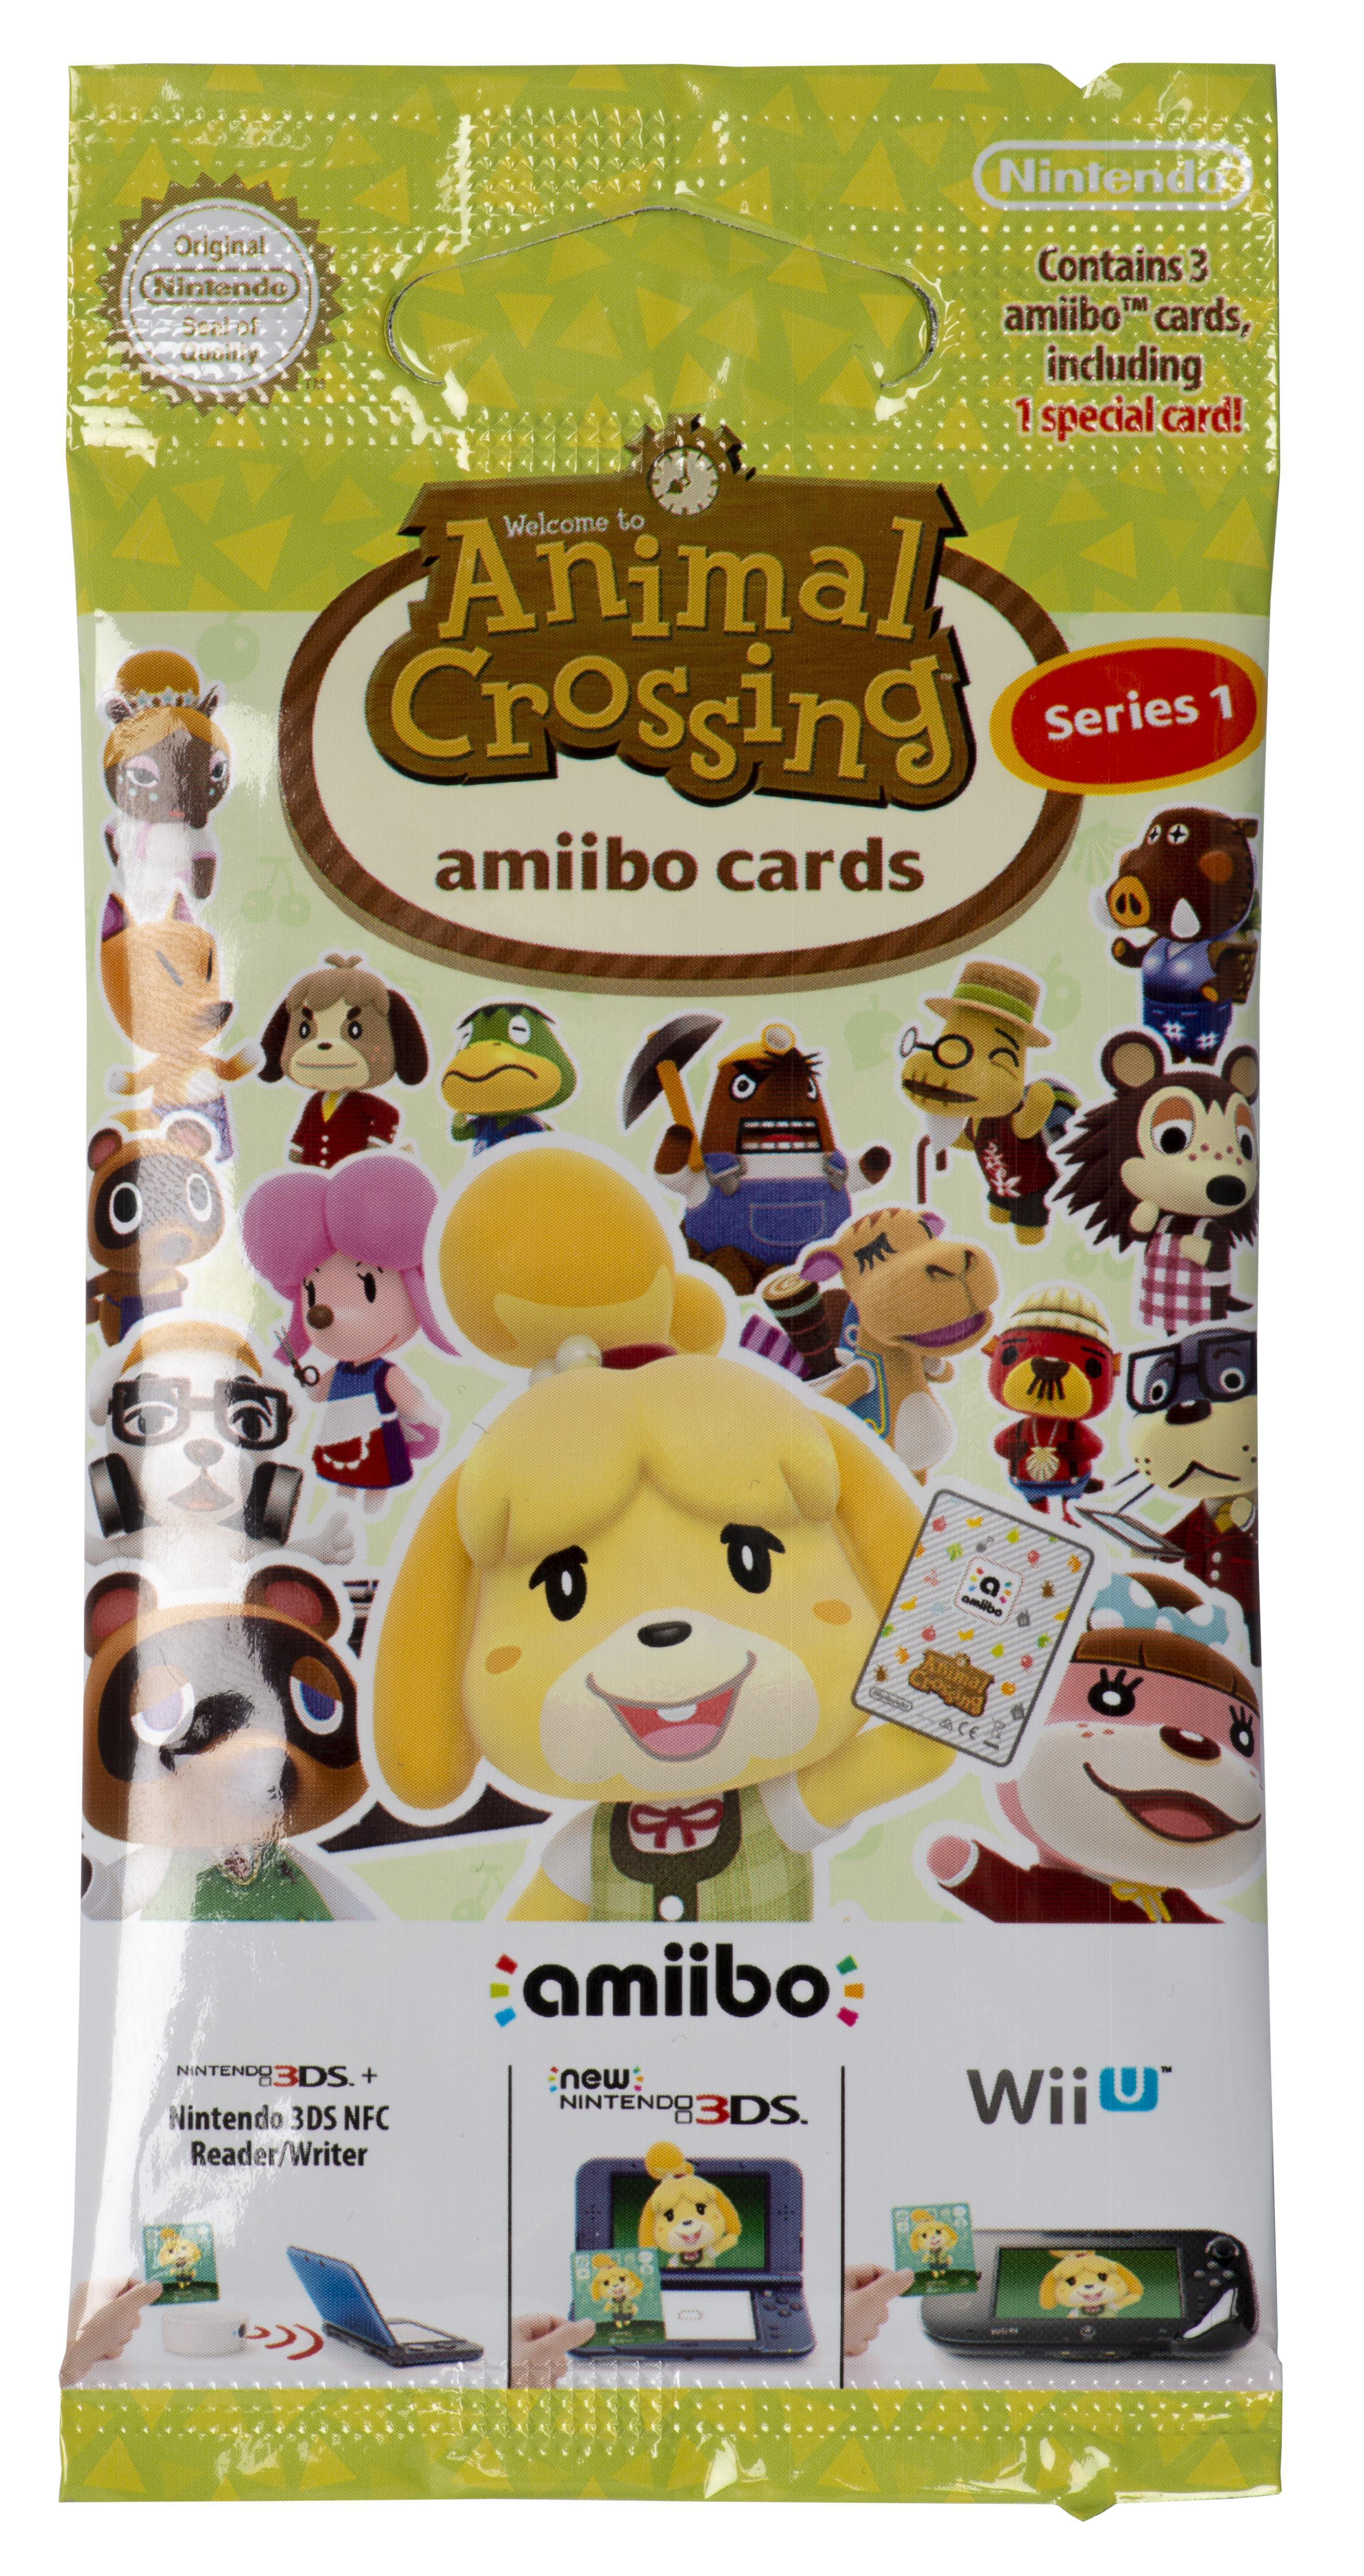 AMIIBO Crossing Animal S1 Sammelkarten 2er Karten